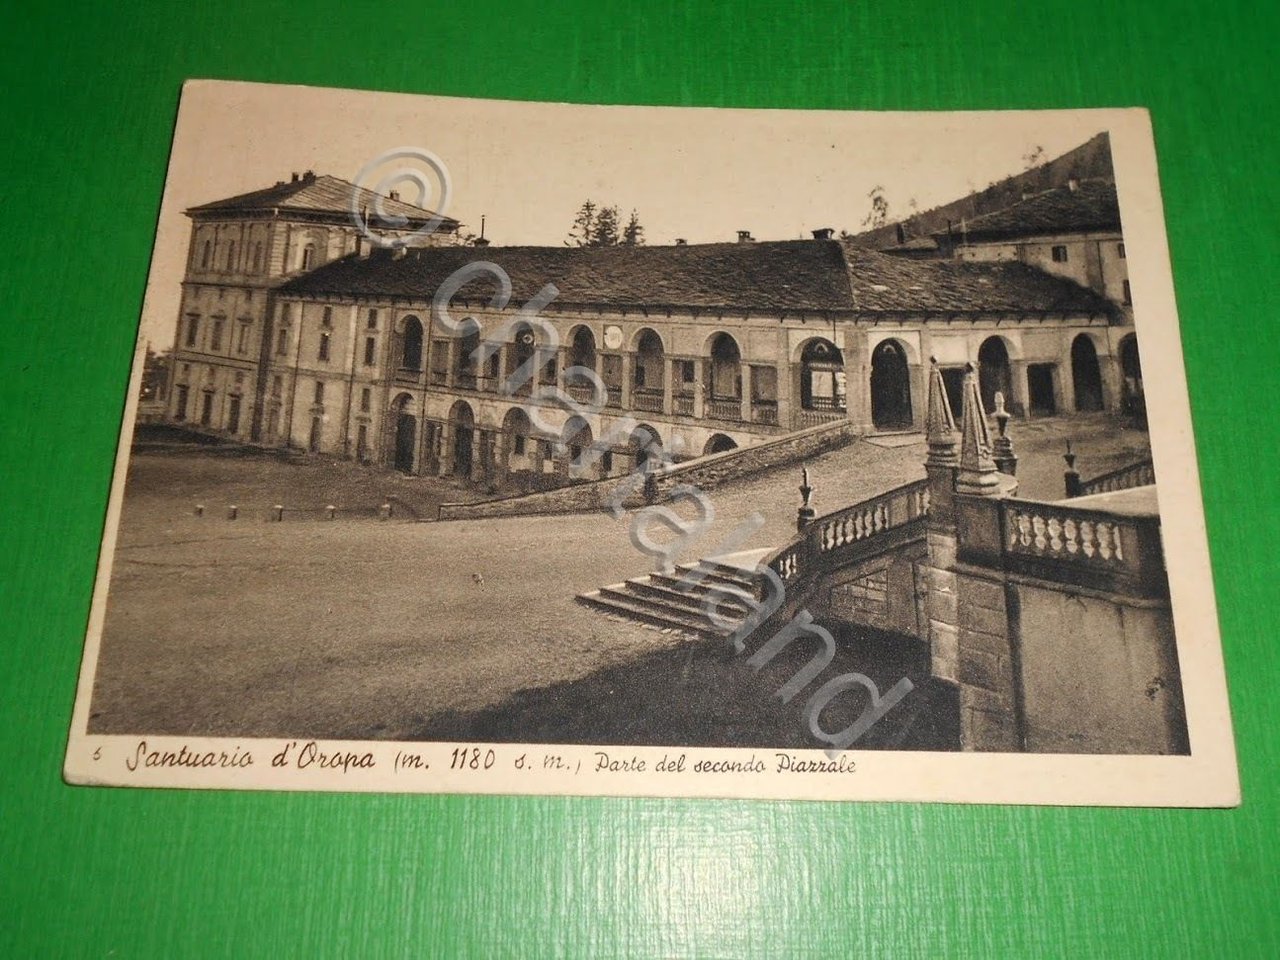 Cartolina Santuario d' Oropa - Parte del secondo Piazzale 1941.